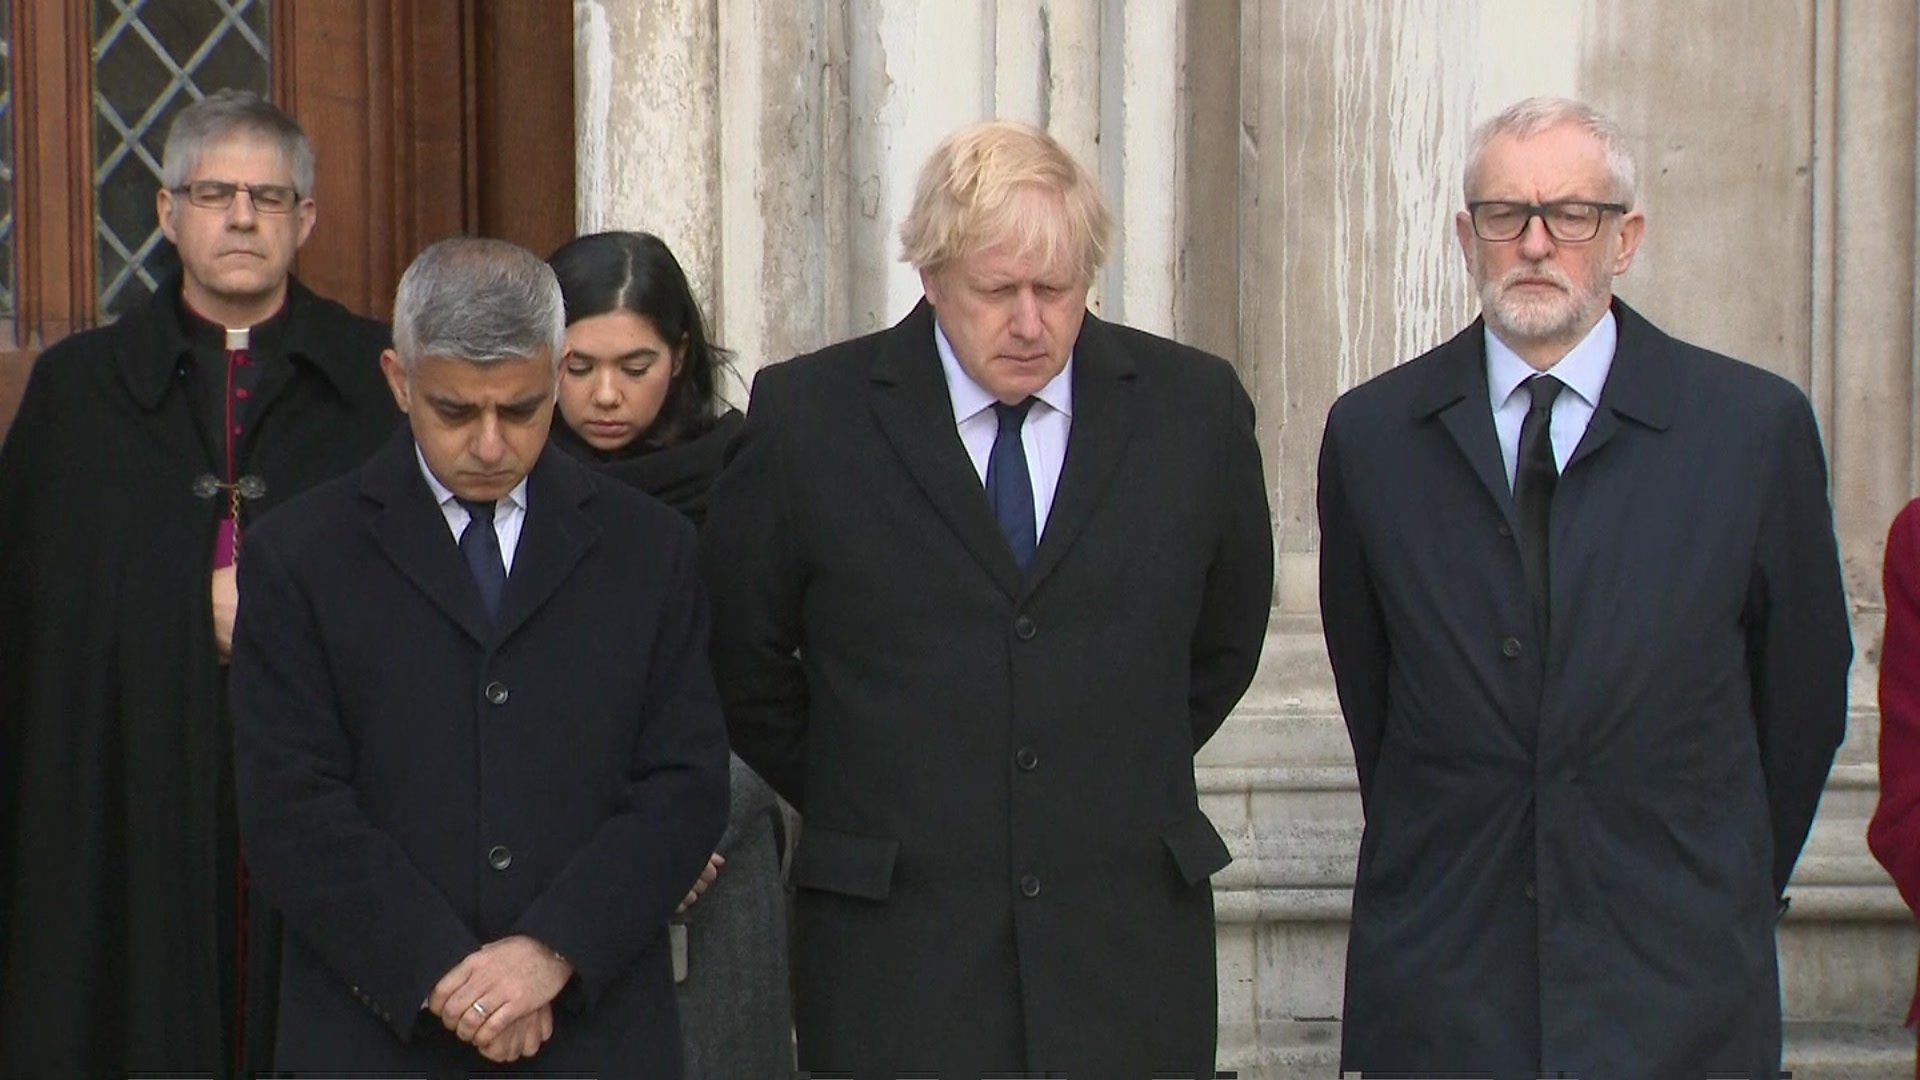 Moment of silence at London Bridge victims vigil